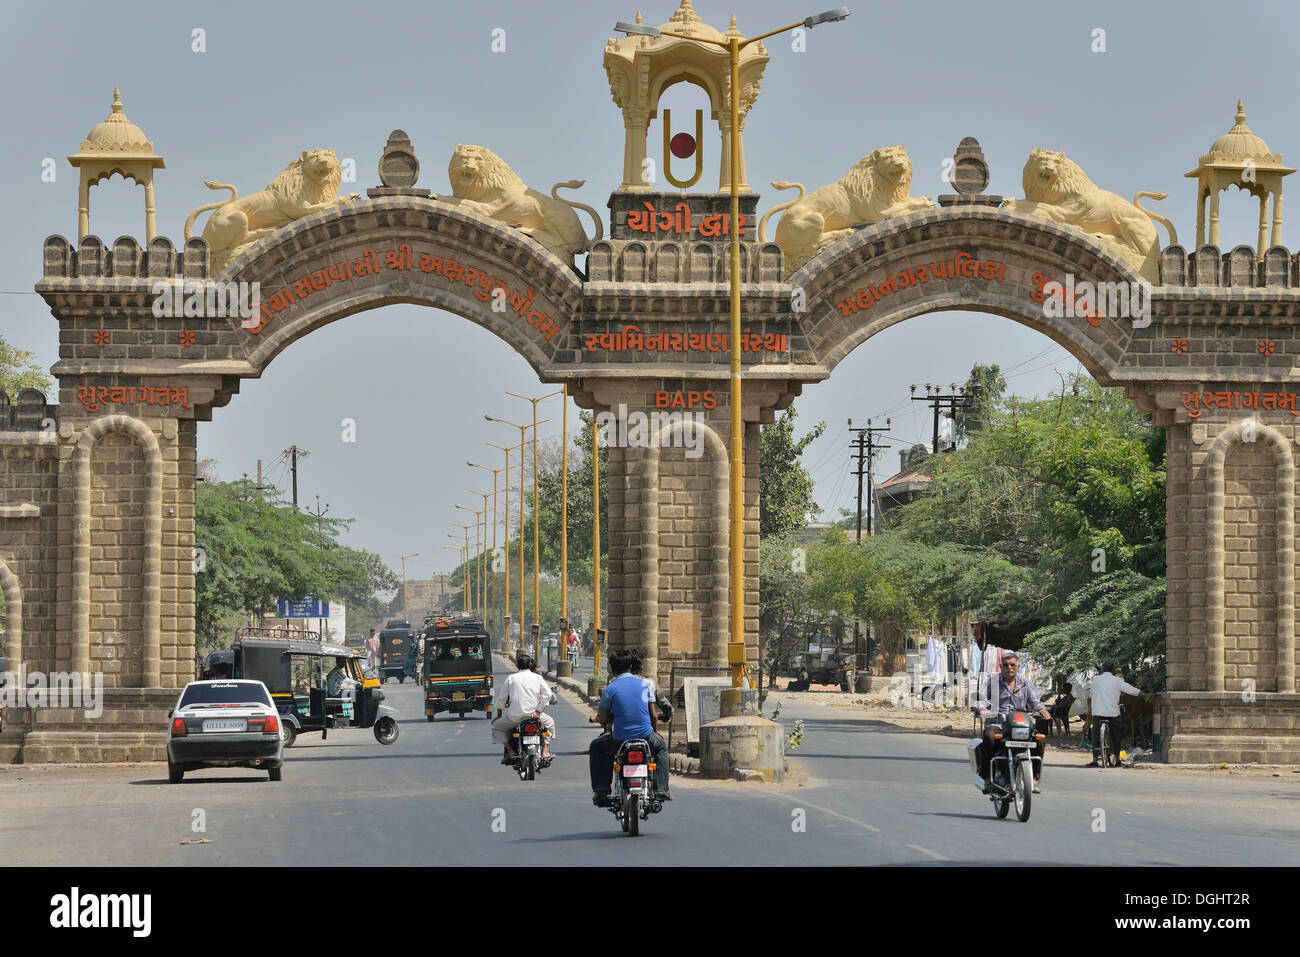 City gate with a representation of lions, Junagadh, Gujarat, India Stock Photo